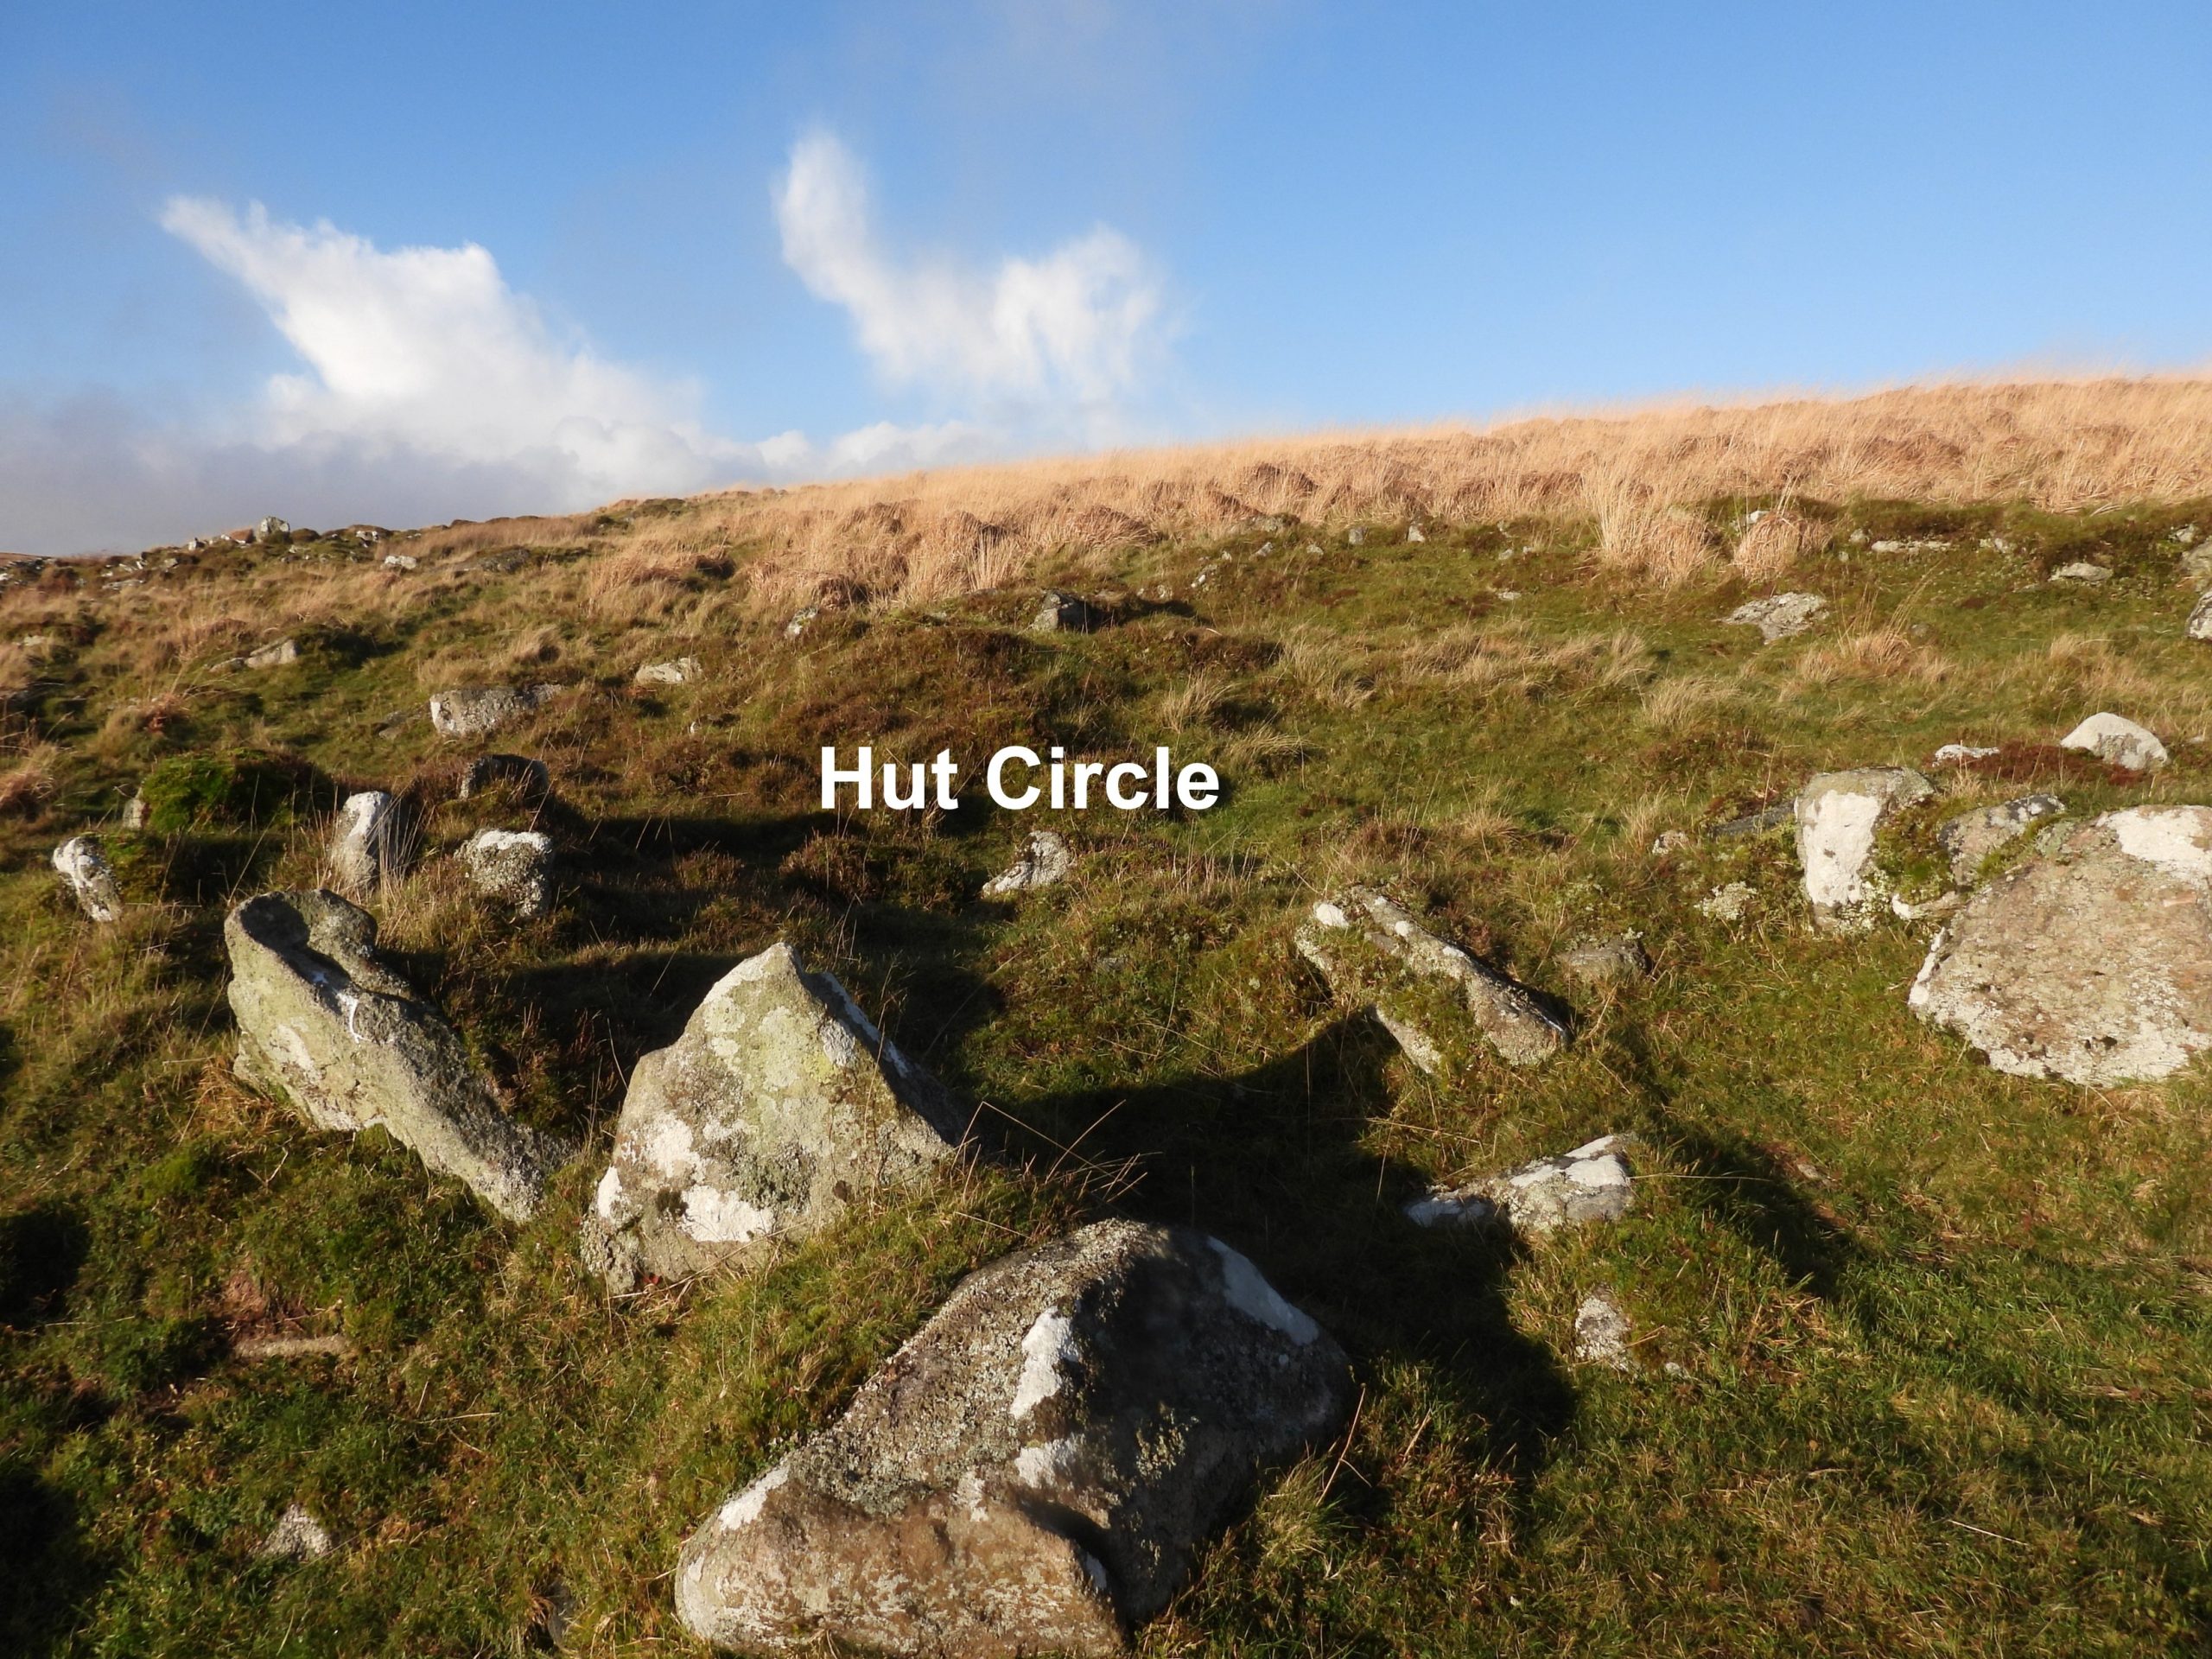 18. Hut Circle